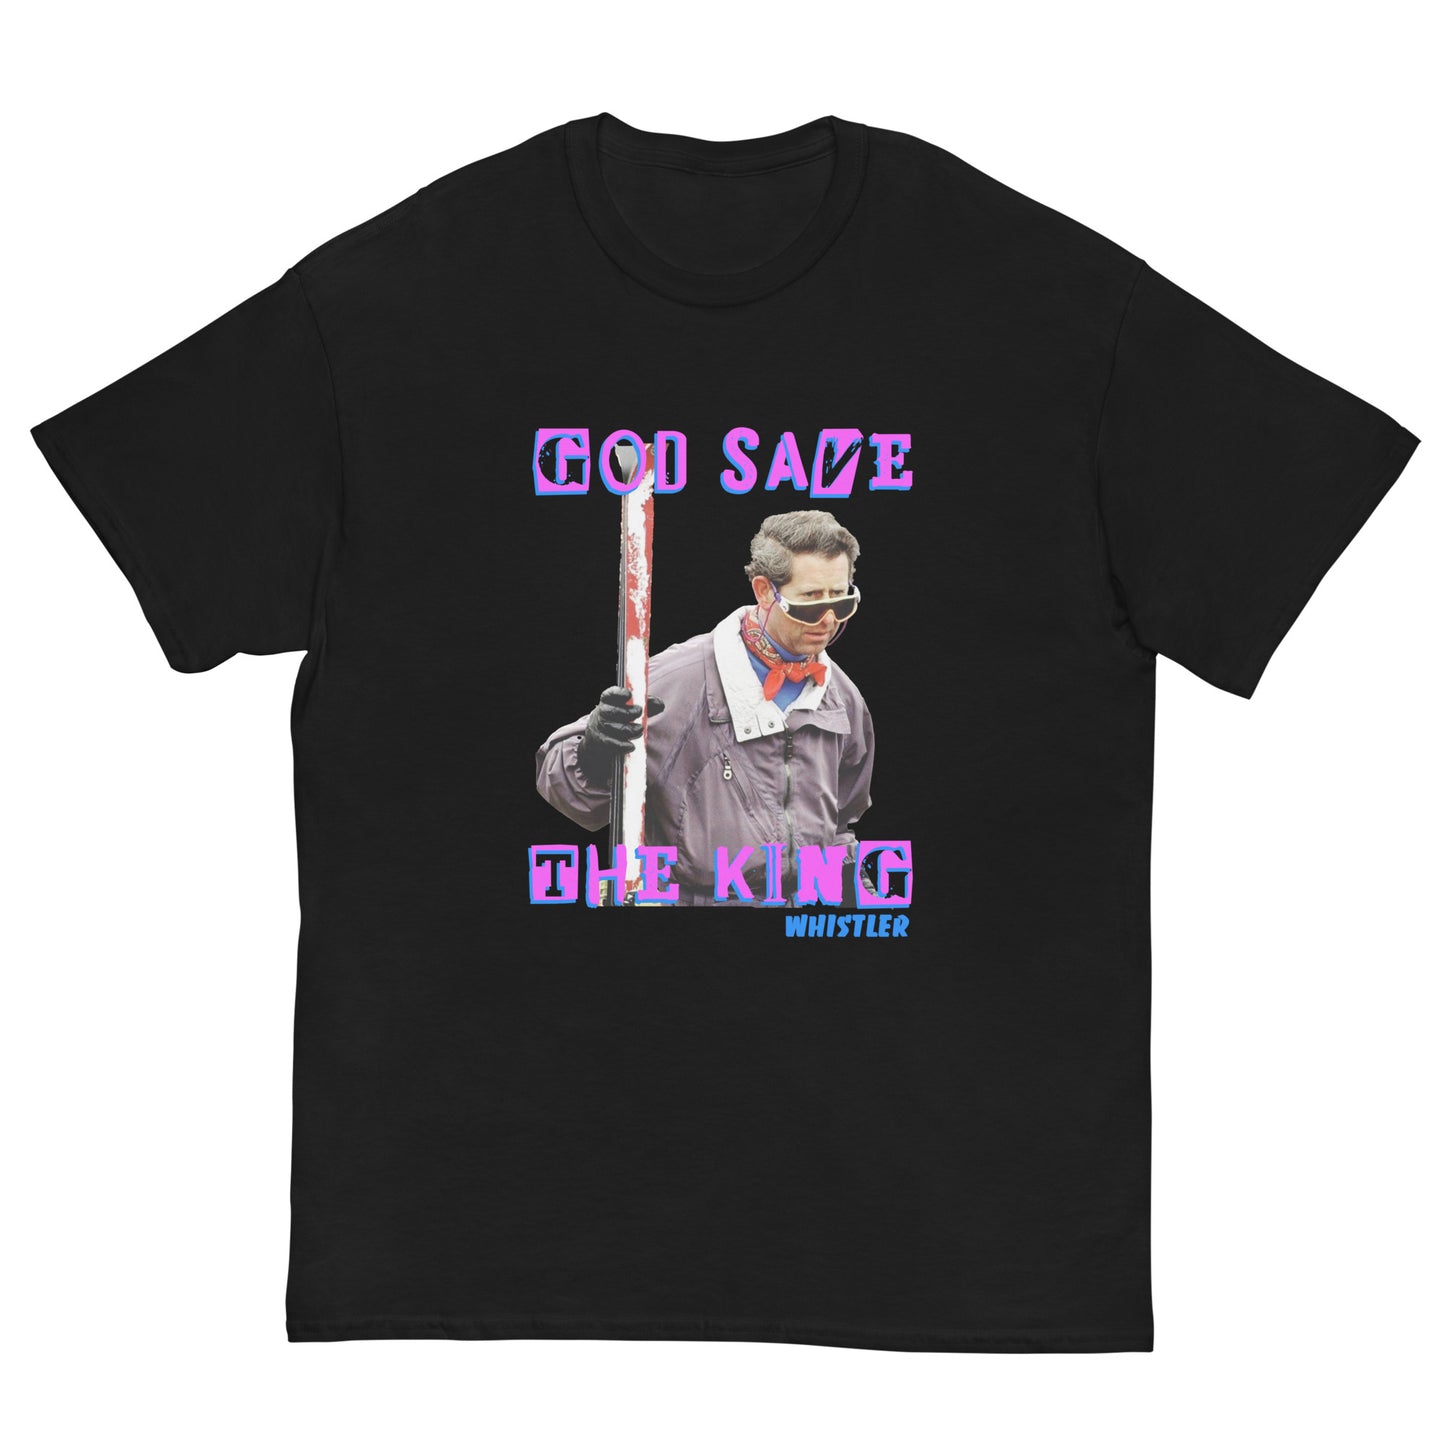 printed t-shirt god save the king whistler black